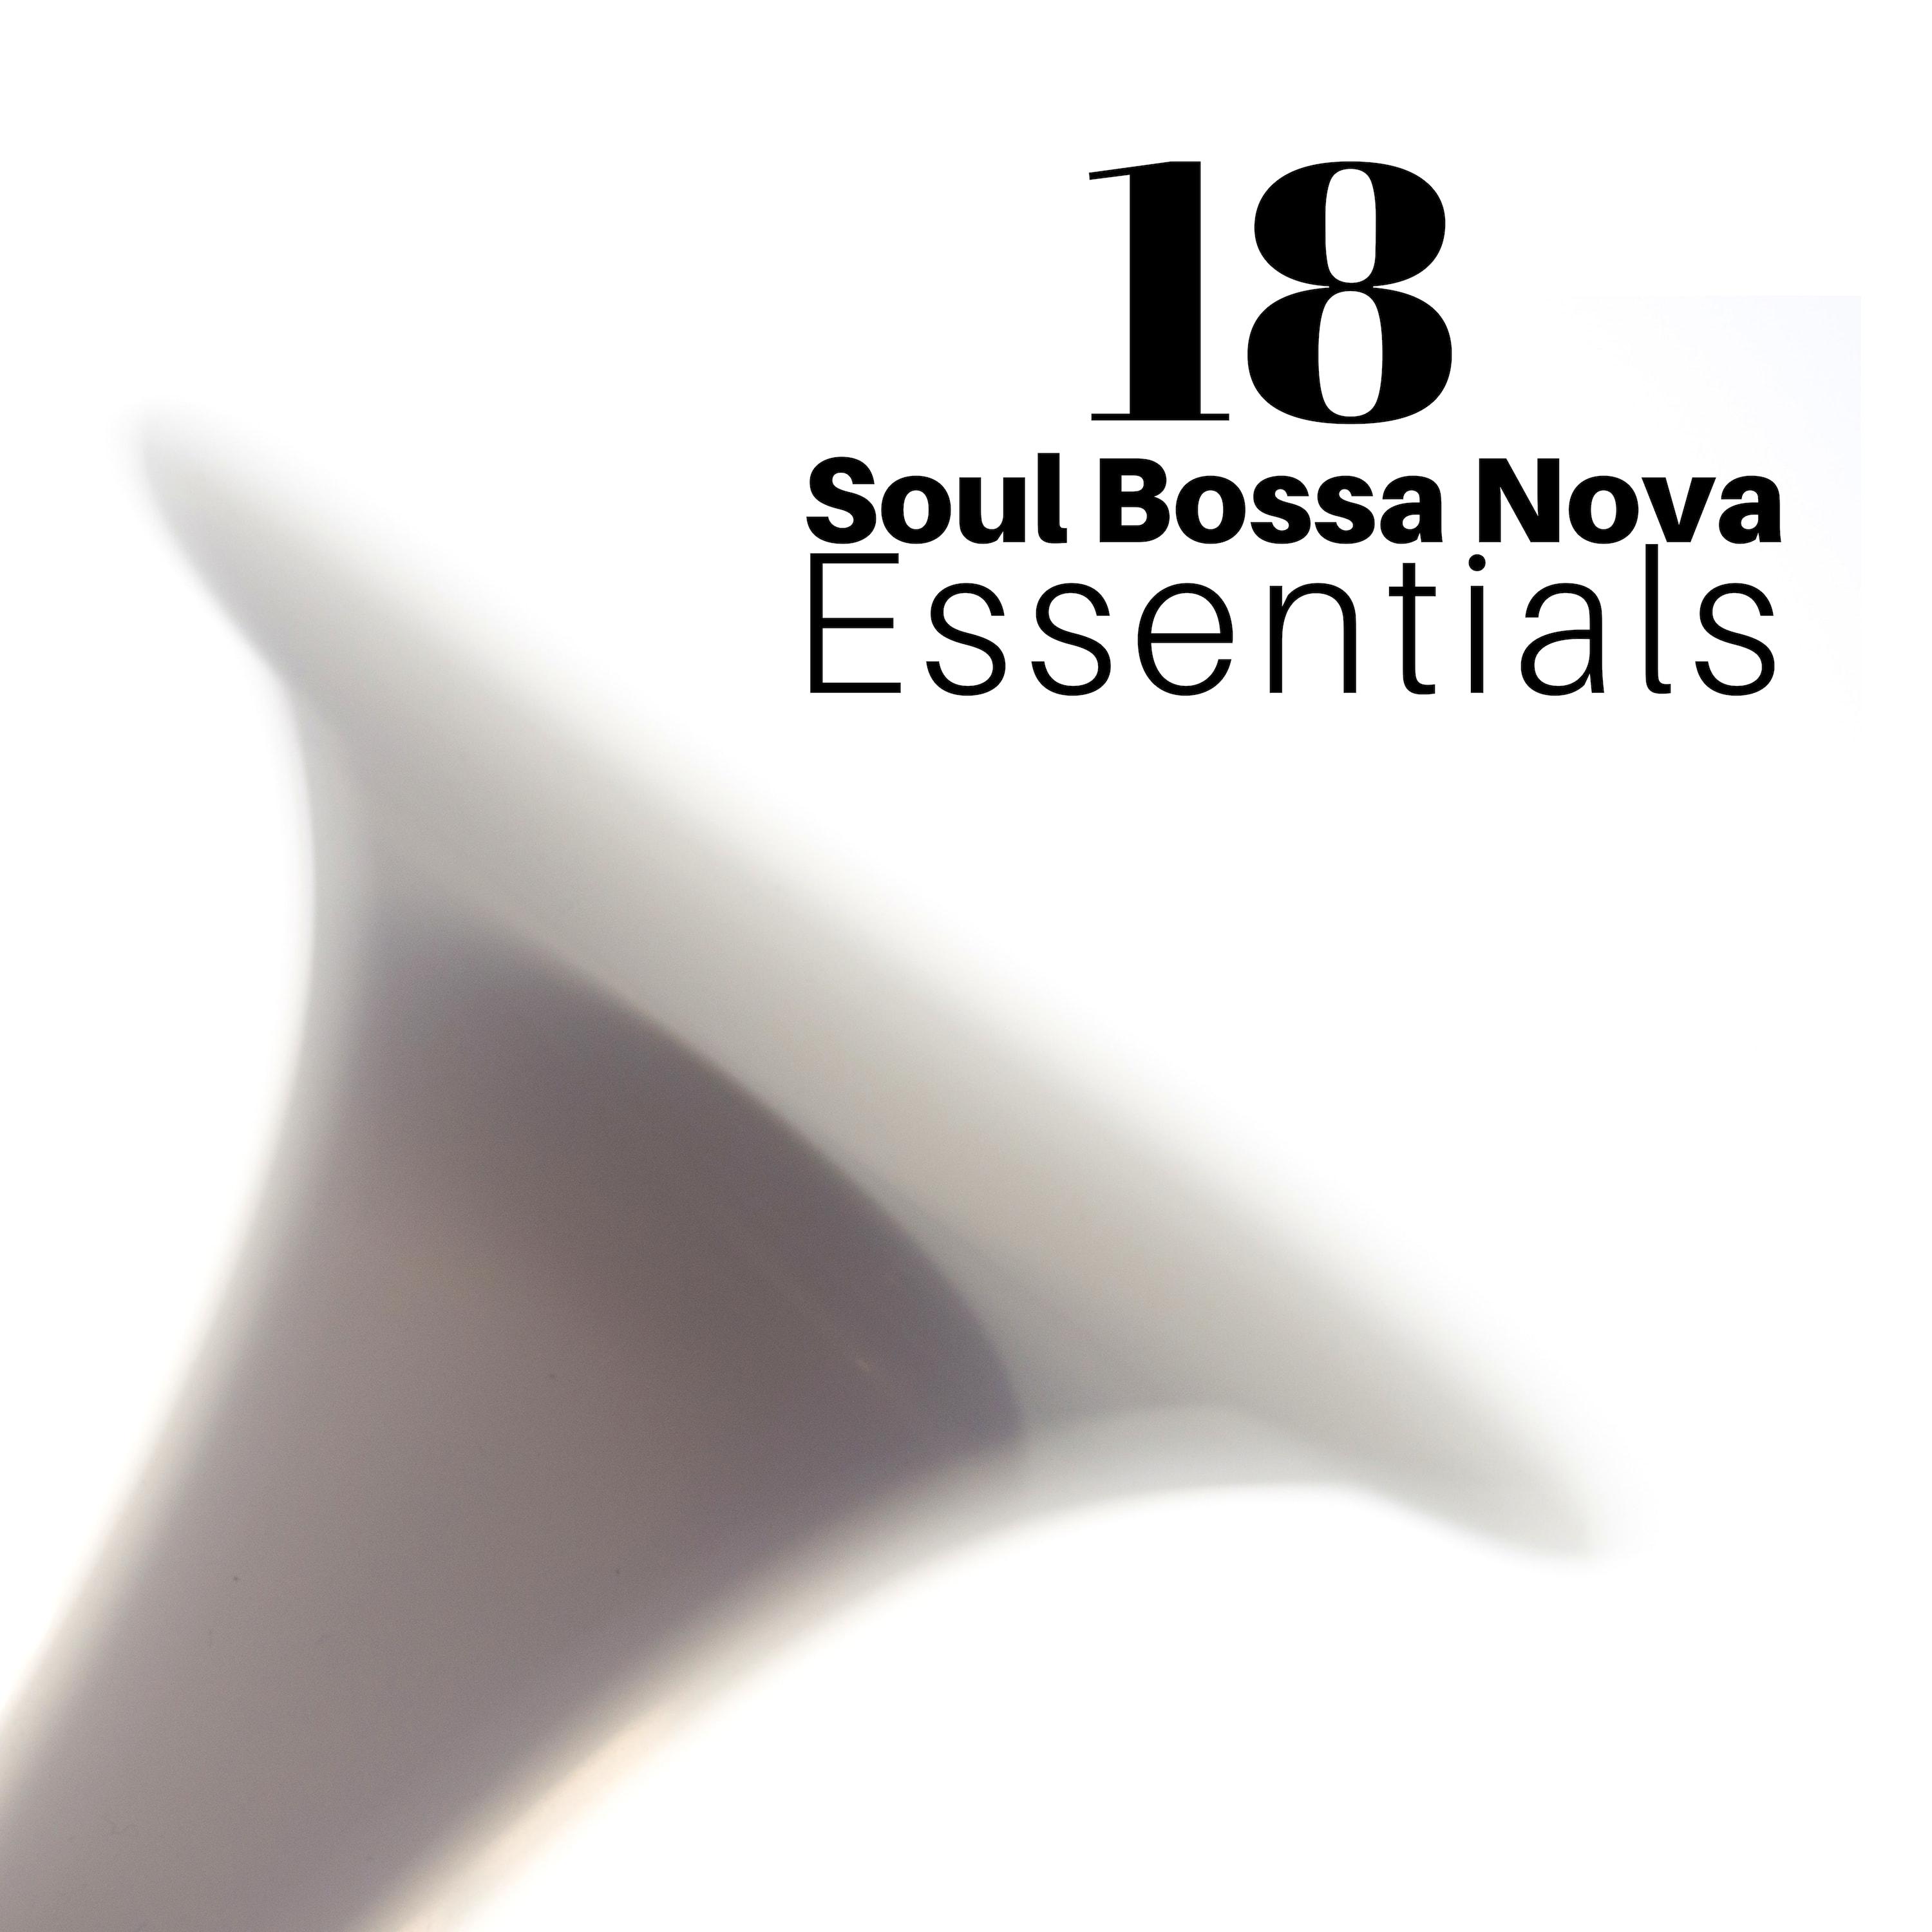 Soul Bossa Nova Essentials